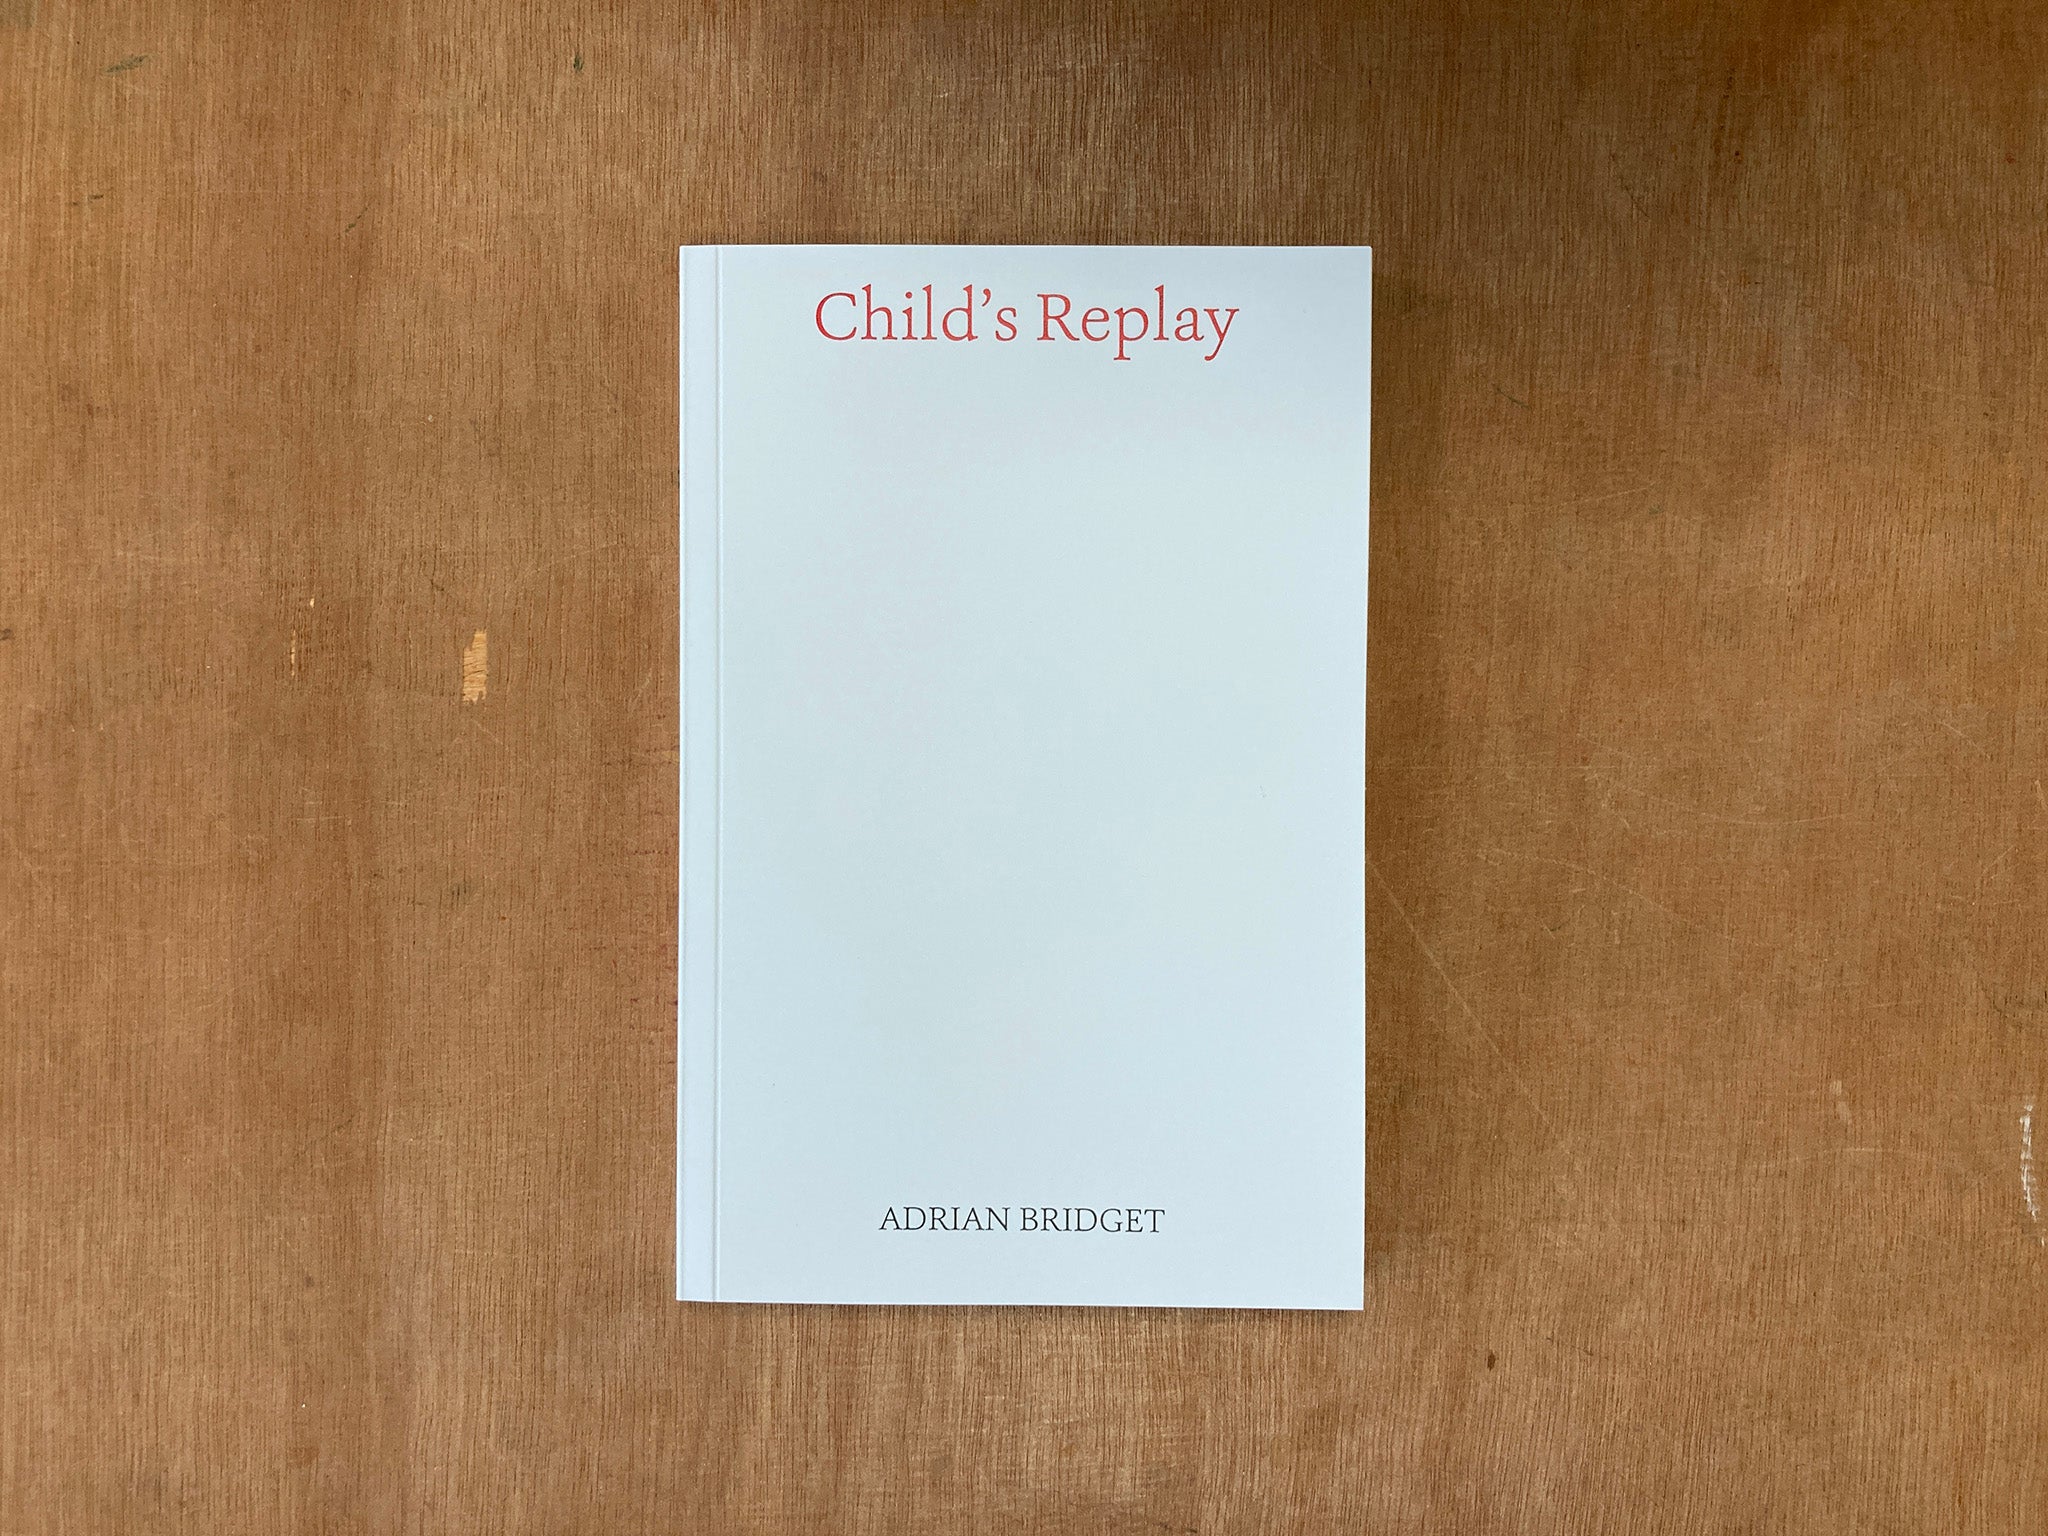 CHILD’S REPLAY by Adrian Bridget